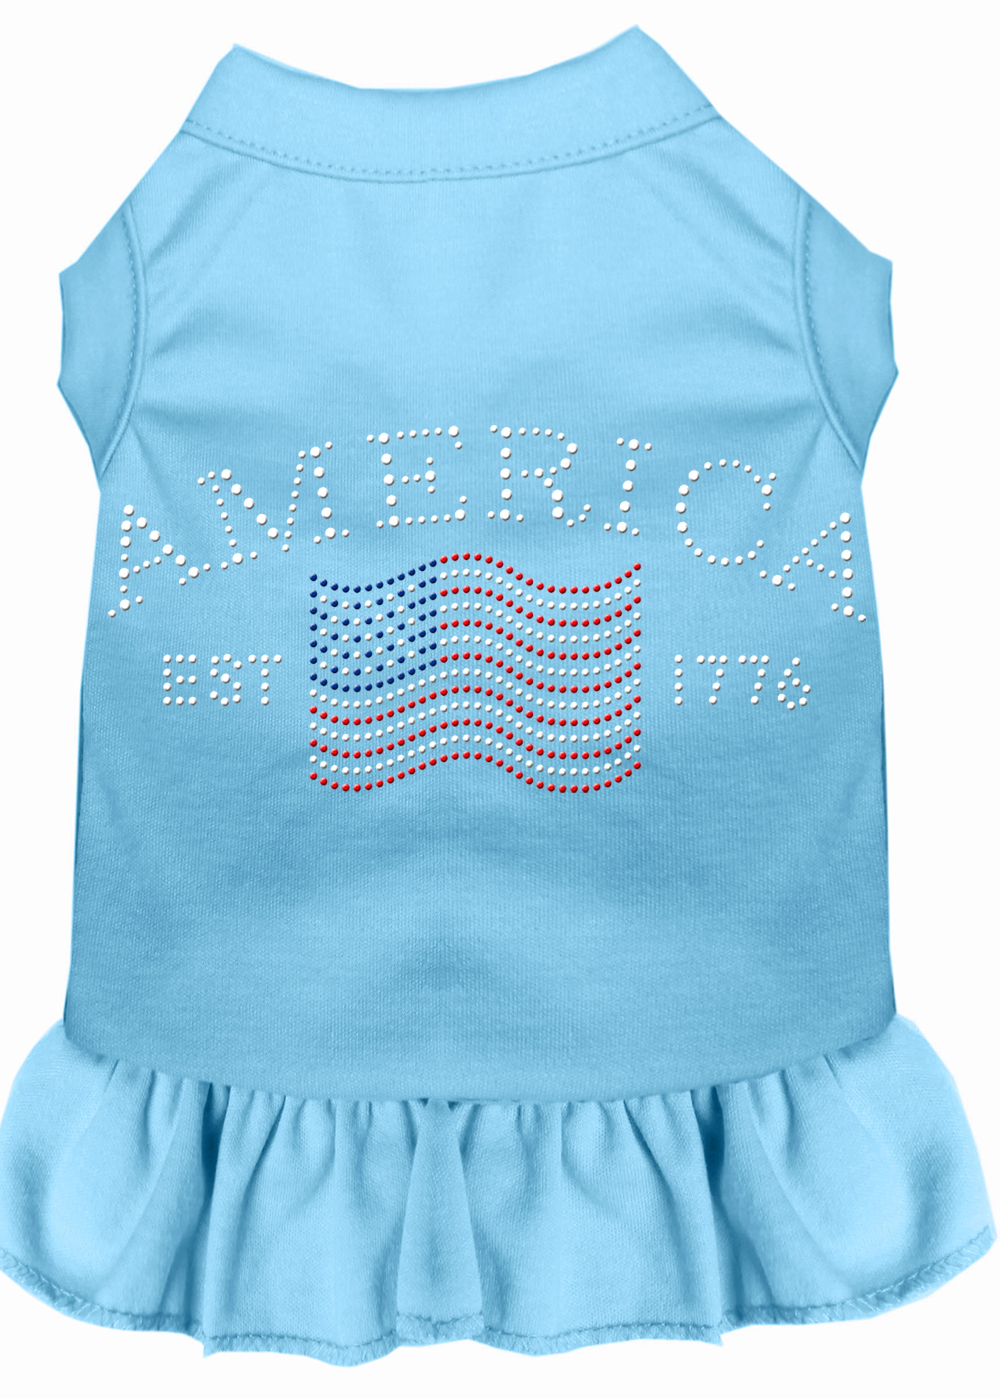 Classic America Rhinestone Dress Baby Blue XXL